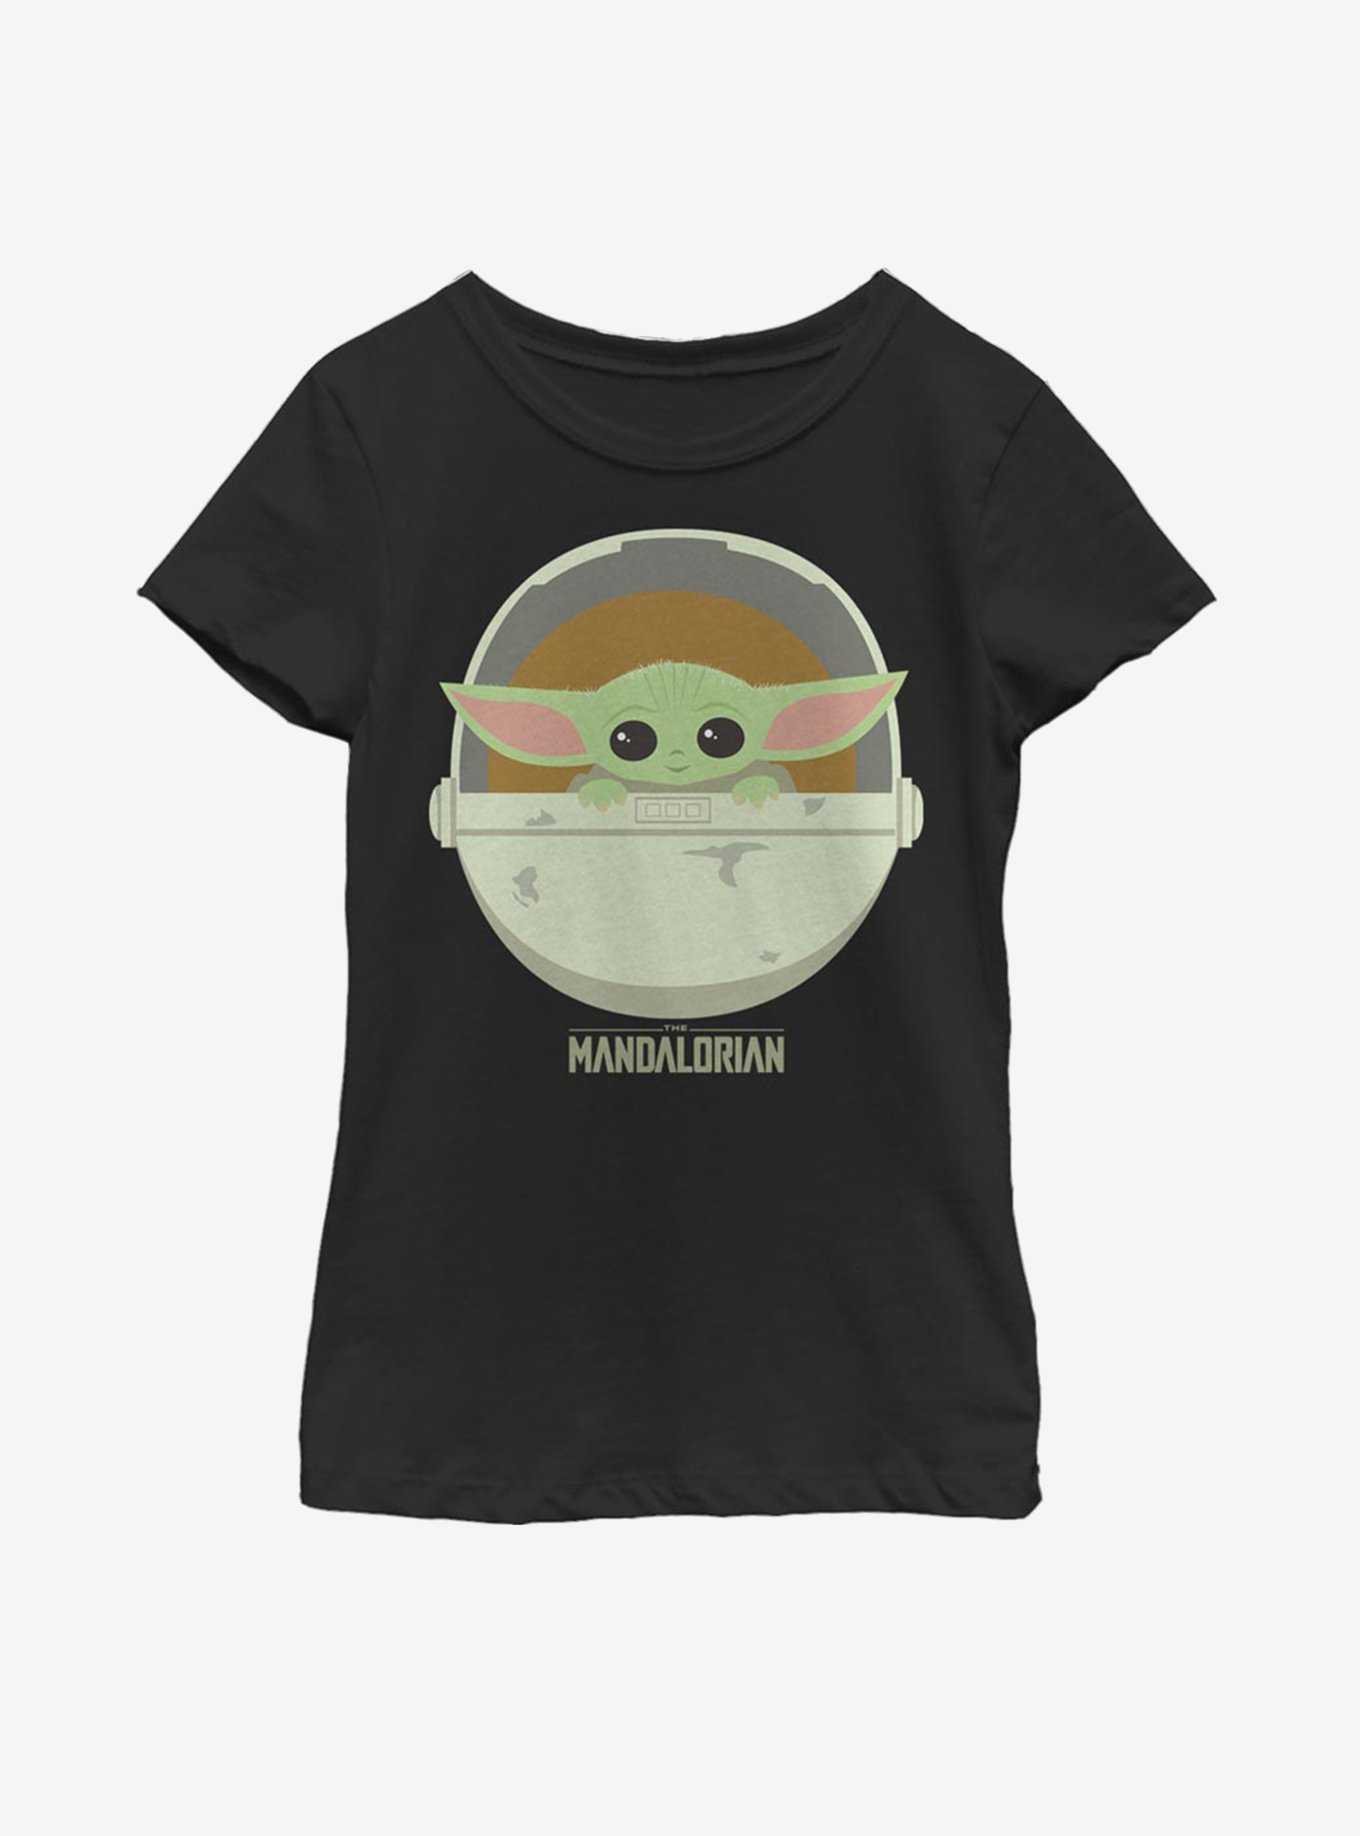 Star Wars The Mandalorian The Child Cute Bassinet Youth Girls T-Shirt, , hi-res